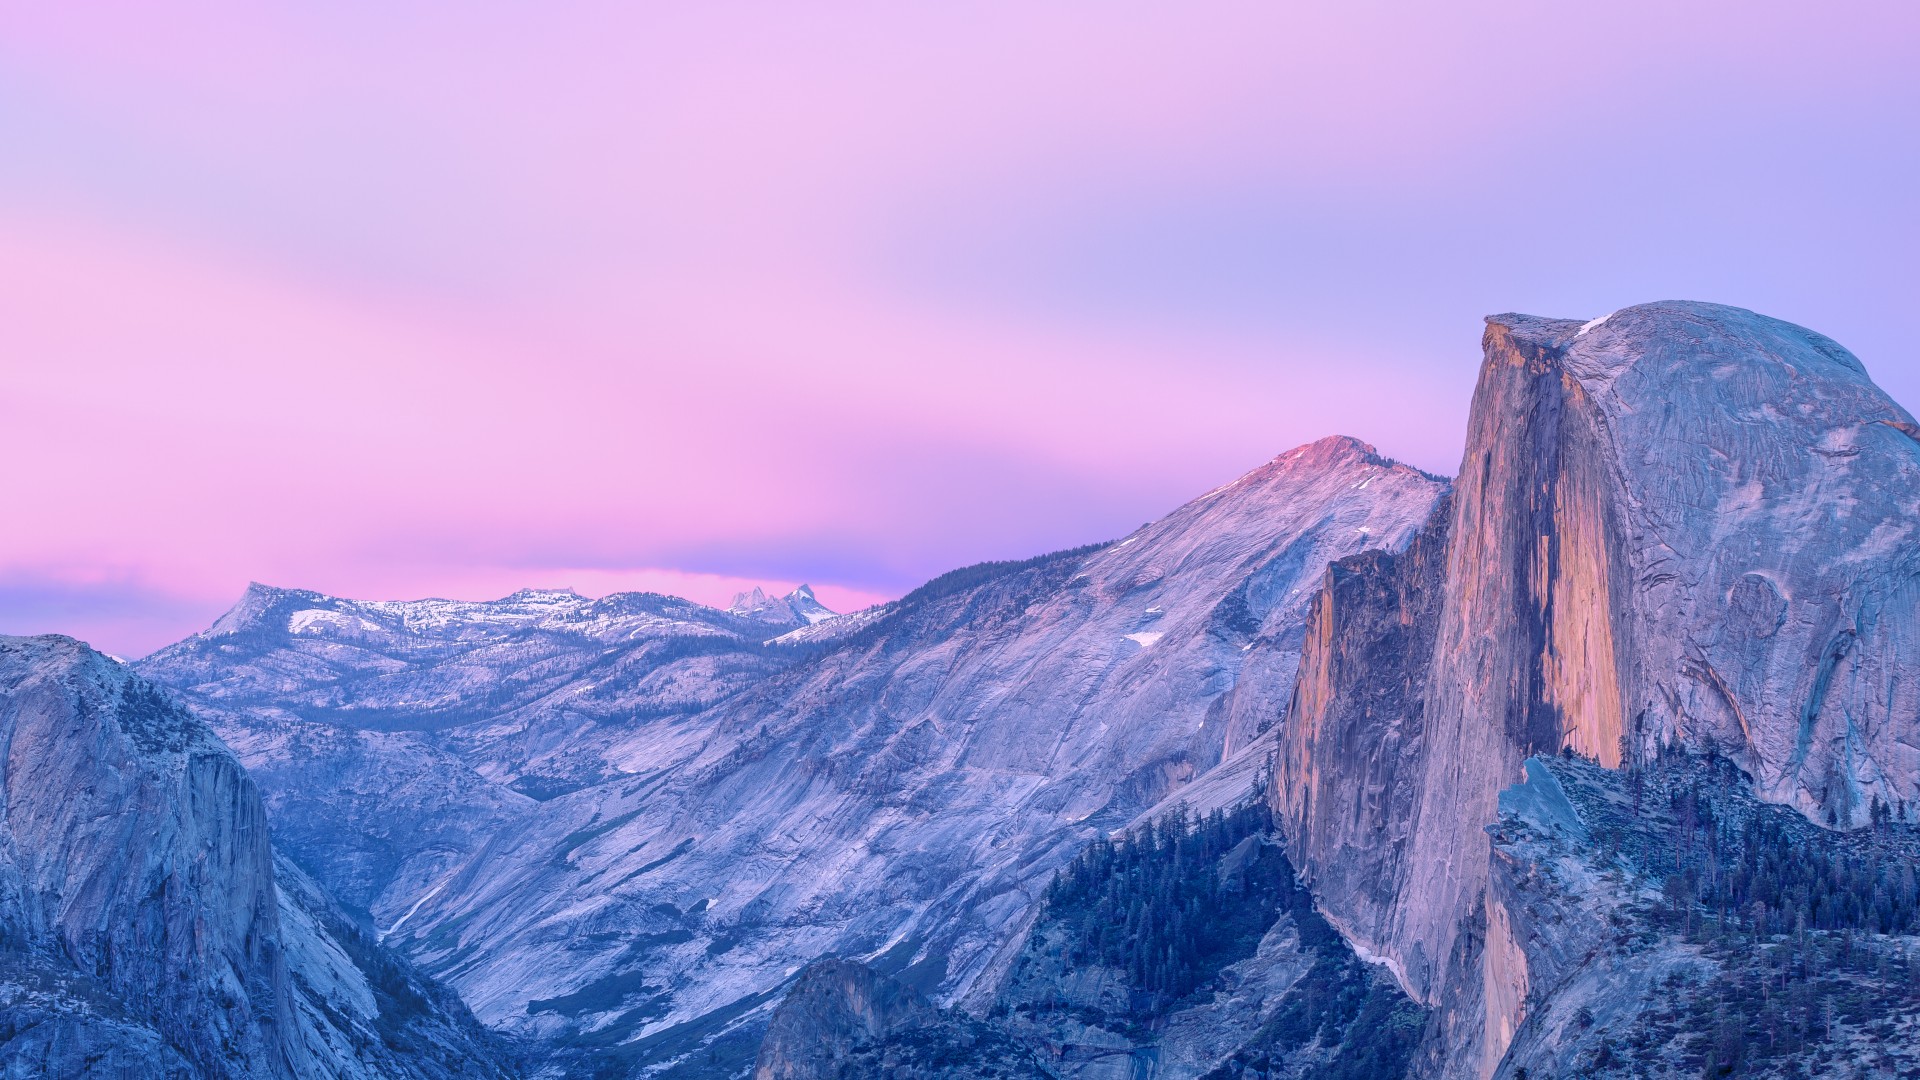 Mountains Yosemite 5k Wallpaper Forest Osx Apple